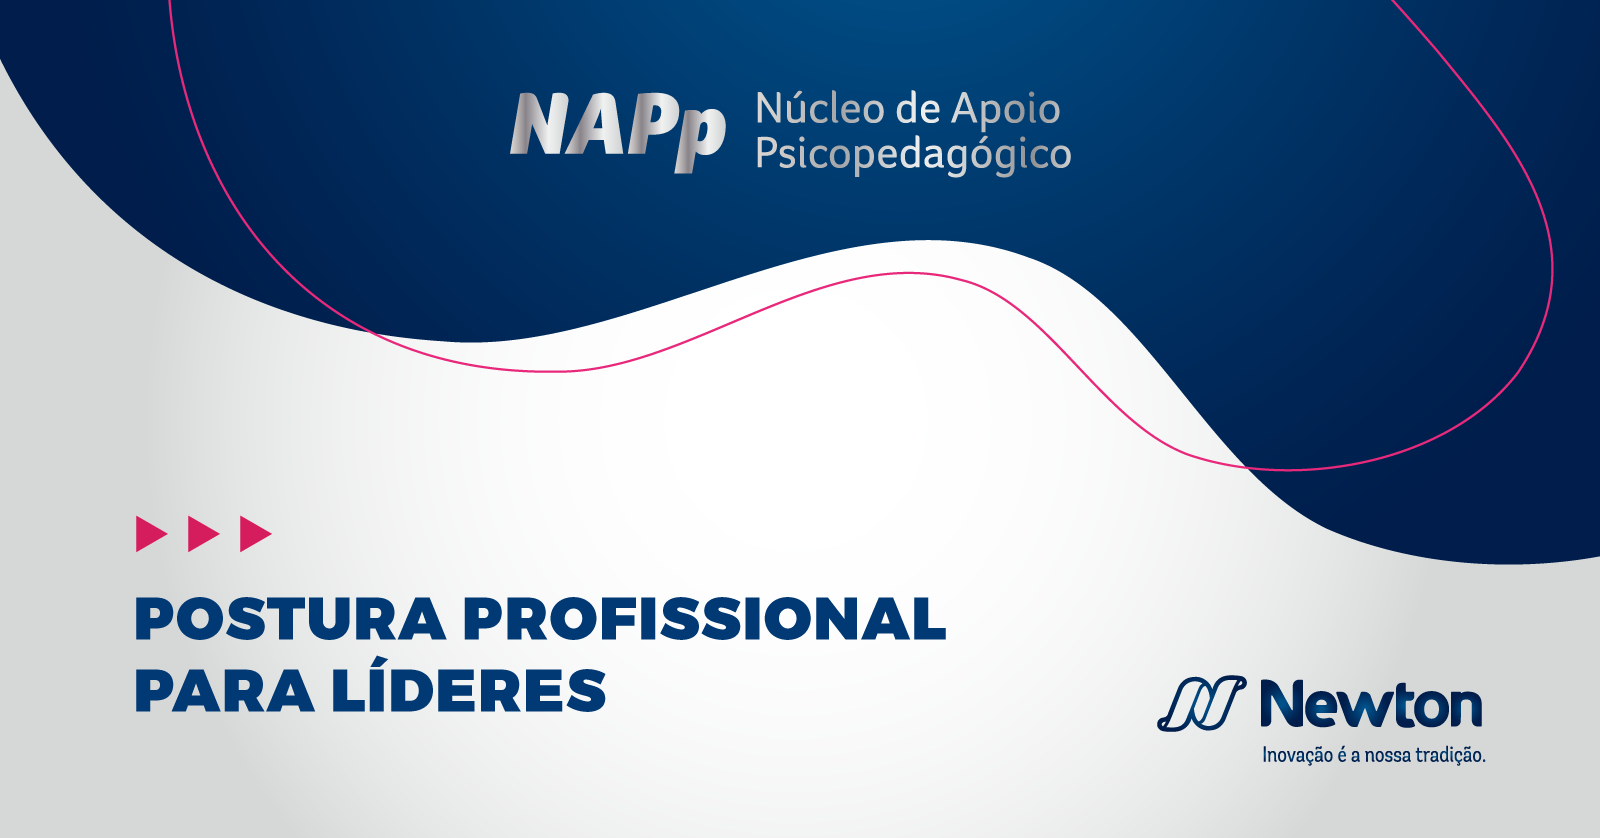  NAPp realiza evento sobre postura profissional